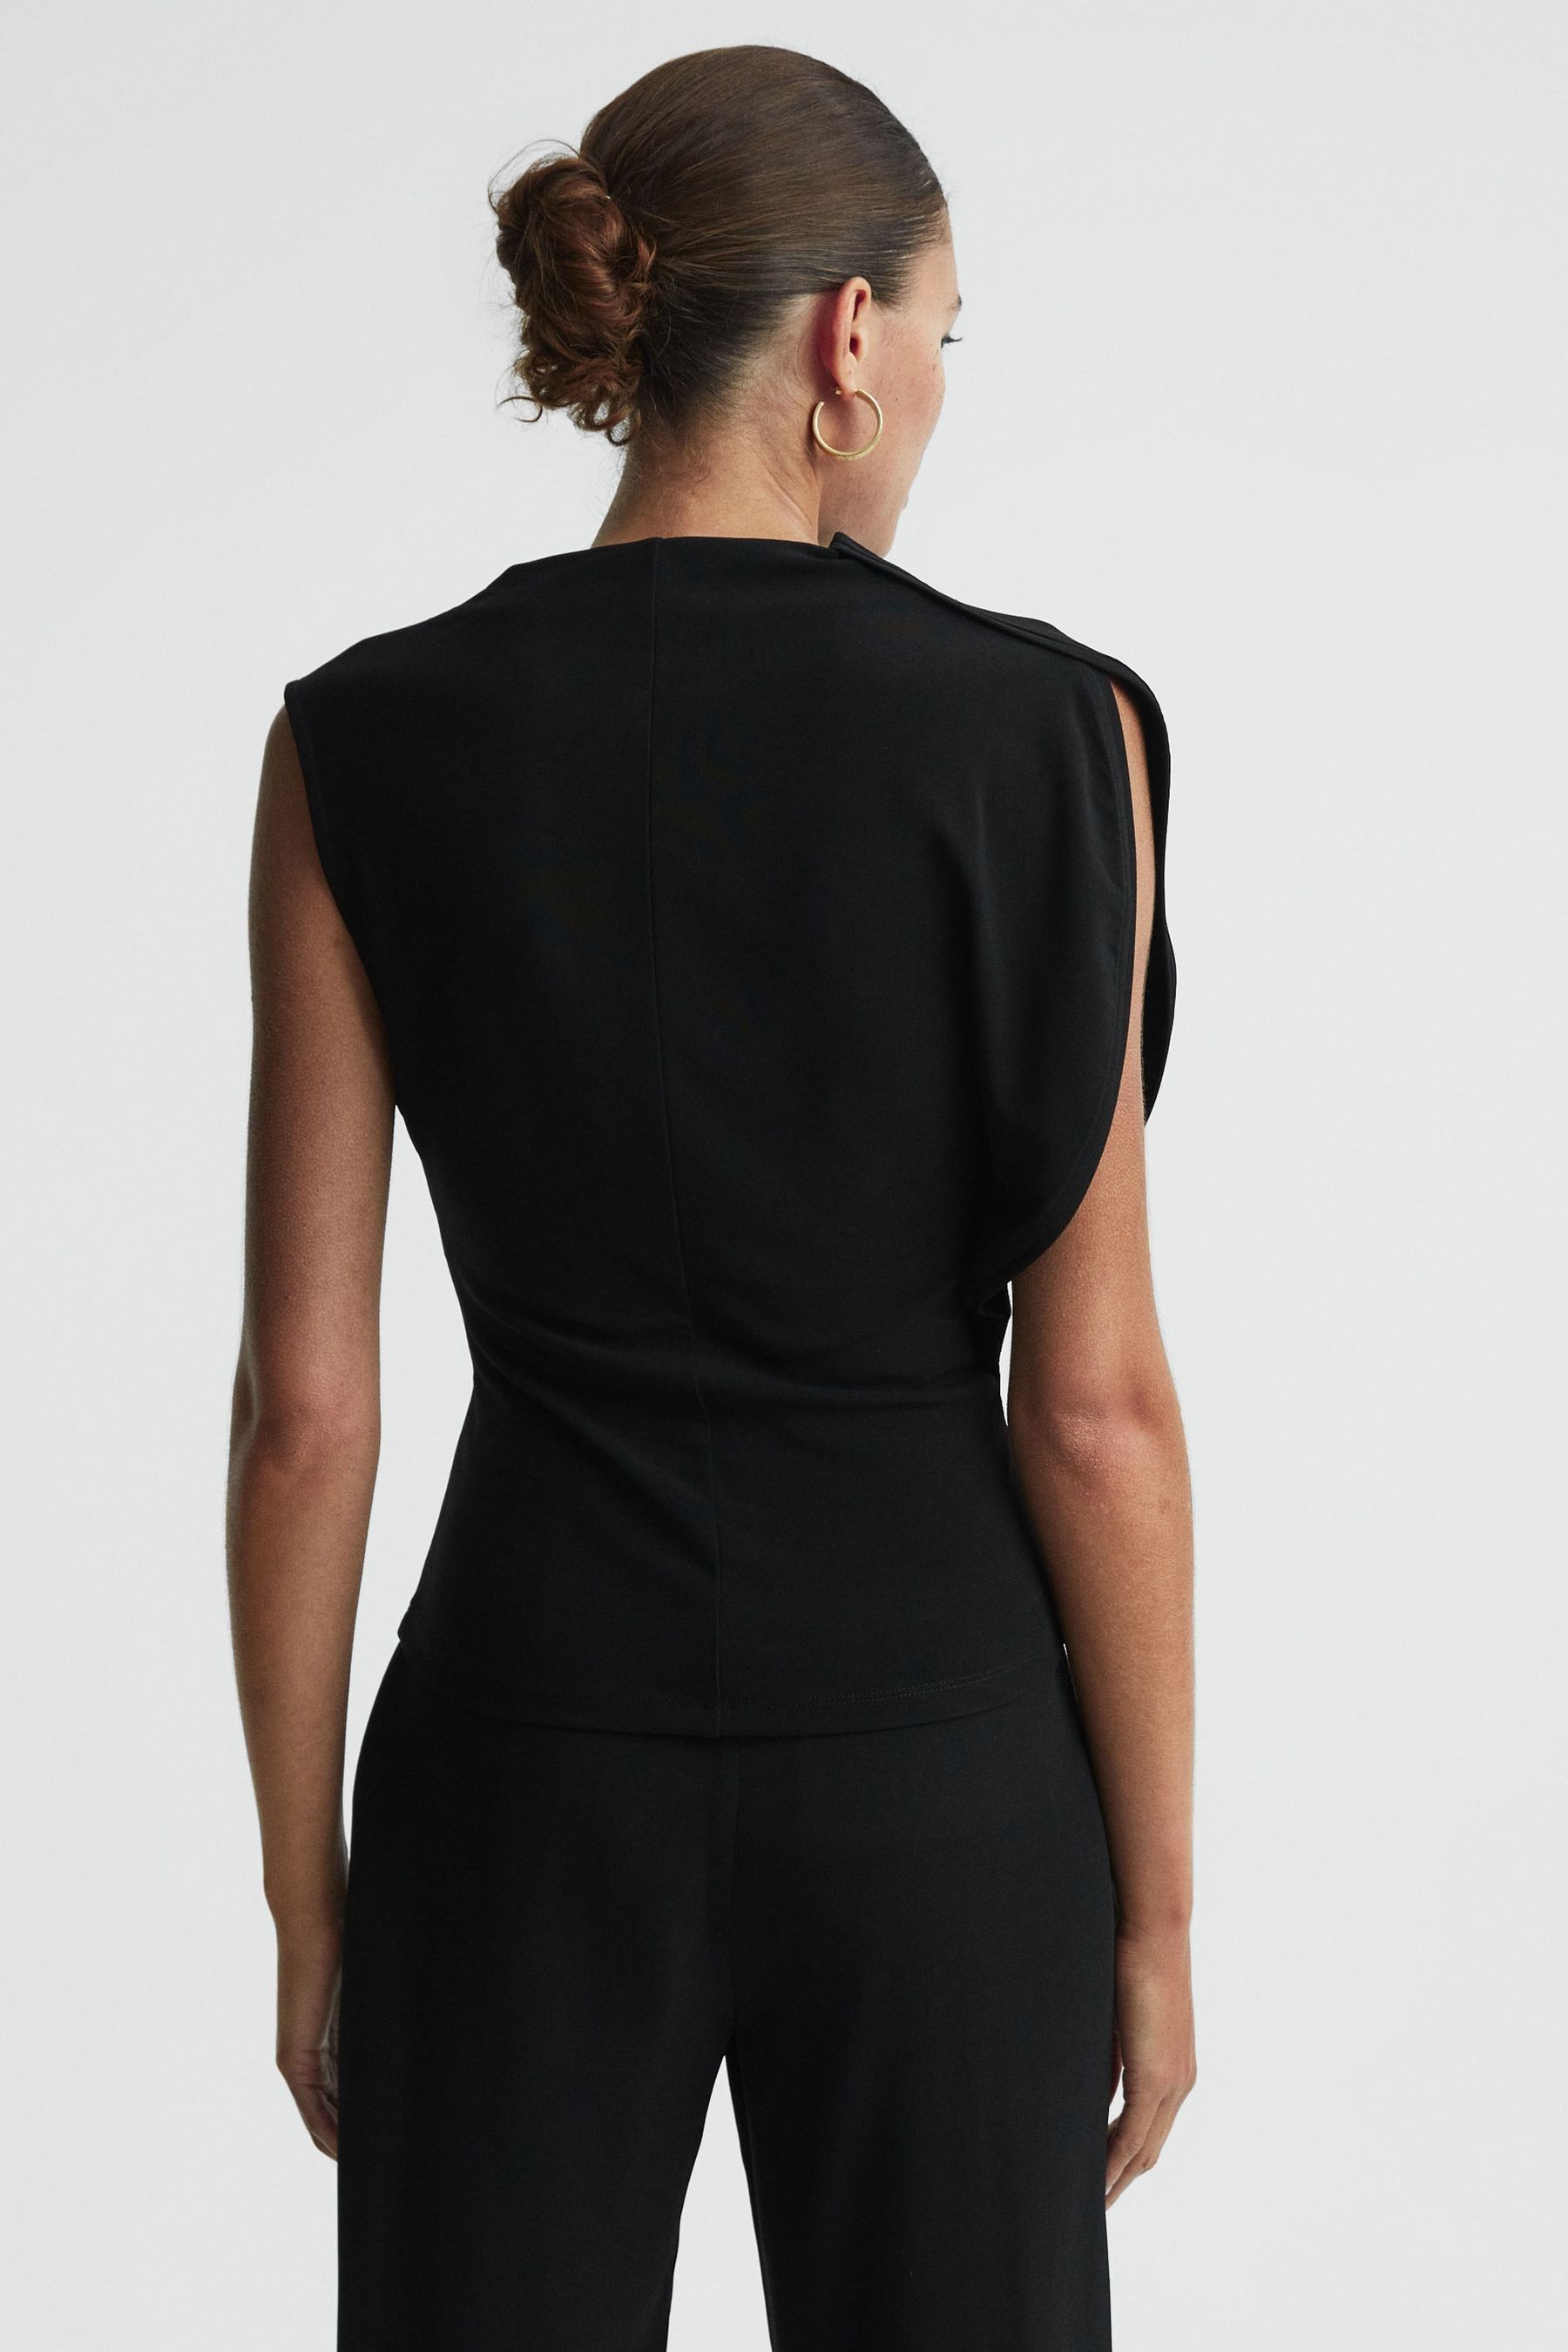 Buy Reiss Black Eva Asymmetric Draped Top from the Next UK online shop